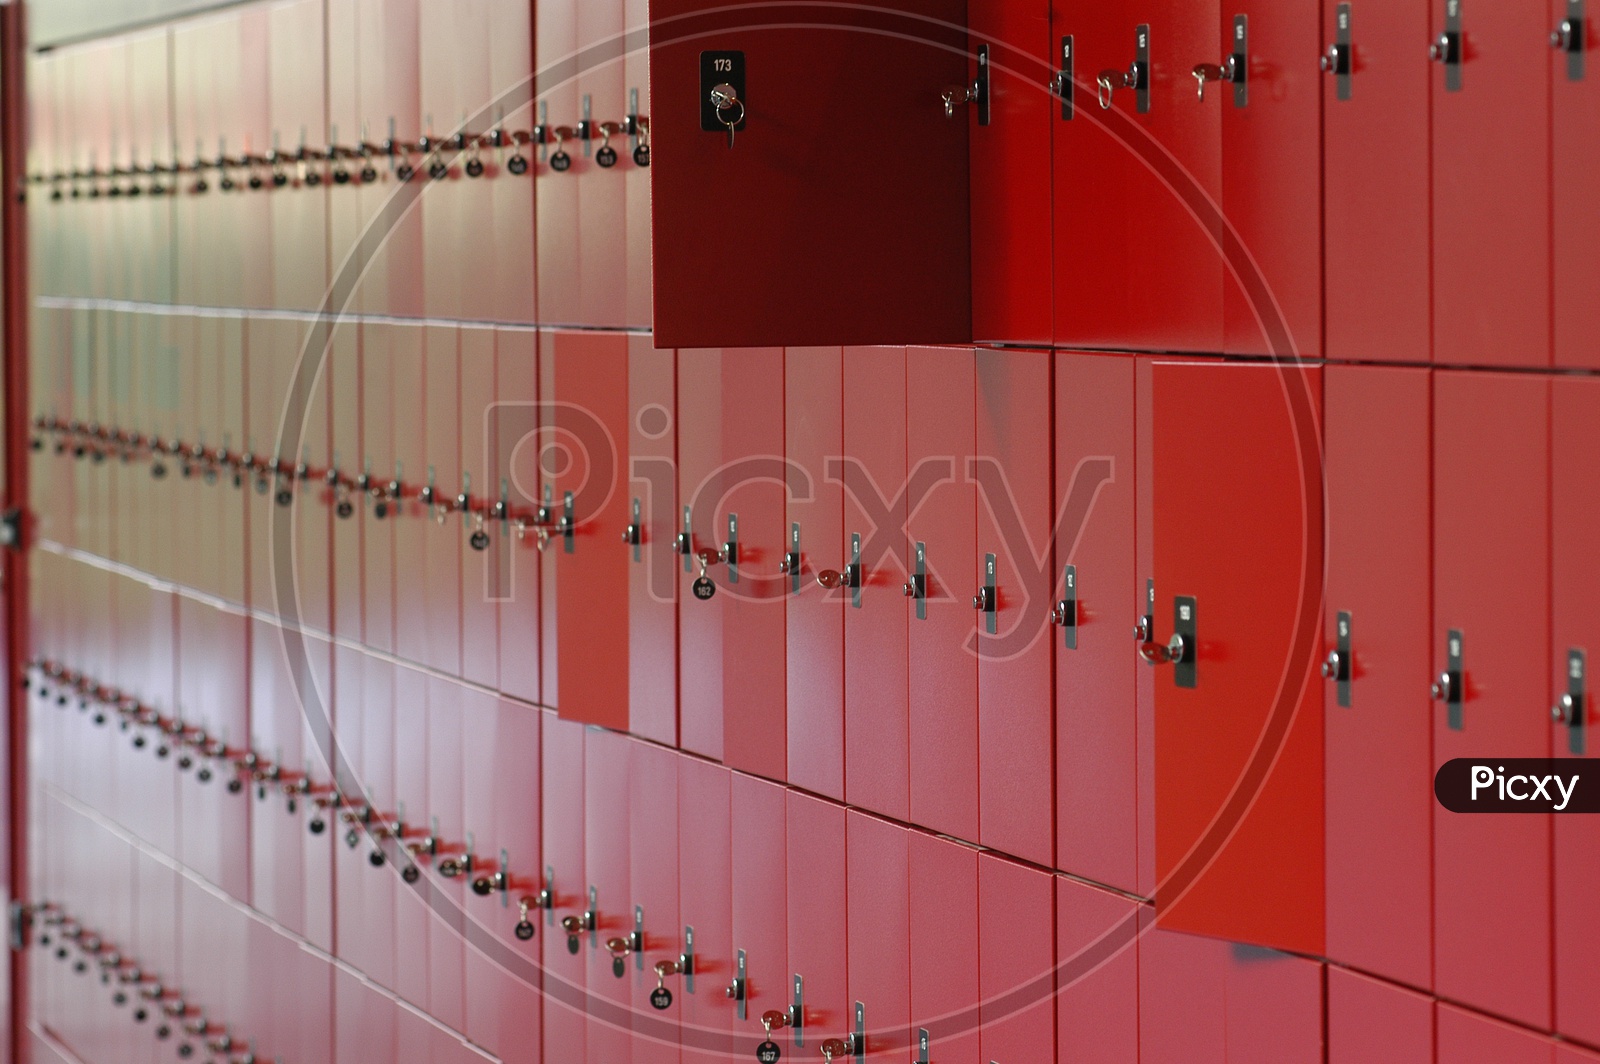 Storage lockers